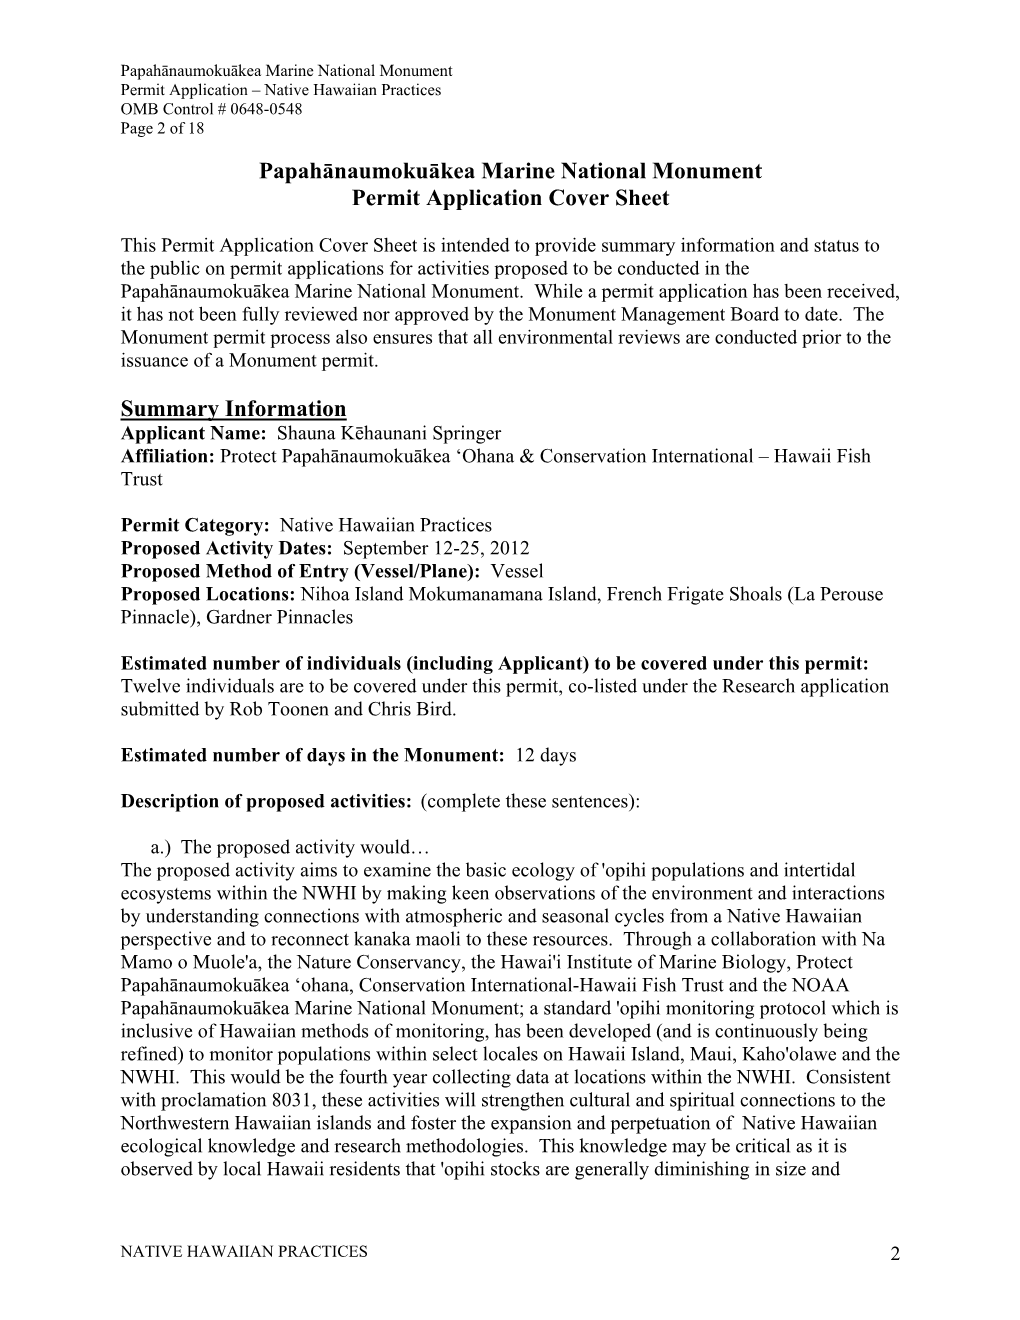 Papahānaumokuākea Marine National Monument Permit Application – Native Hawaiian Practices OMB Control # 0648-0548 Page 2 of 18